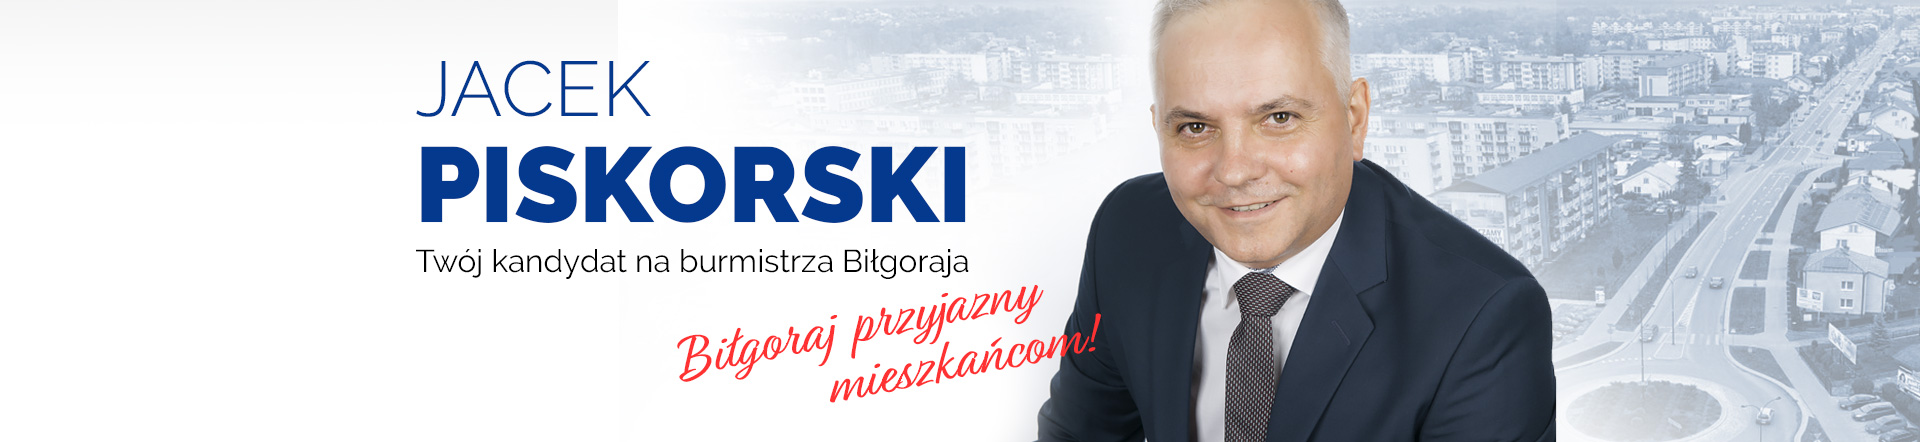 Jacek Piskorski - kandydat na burmistrza Biłgoraja